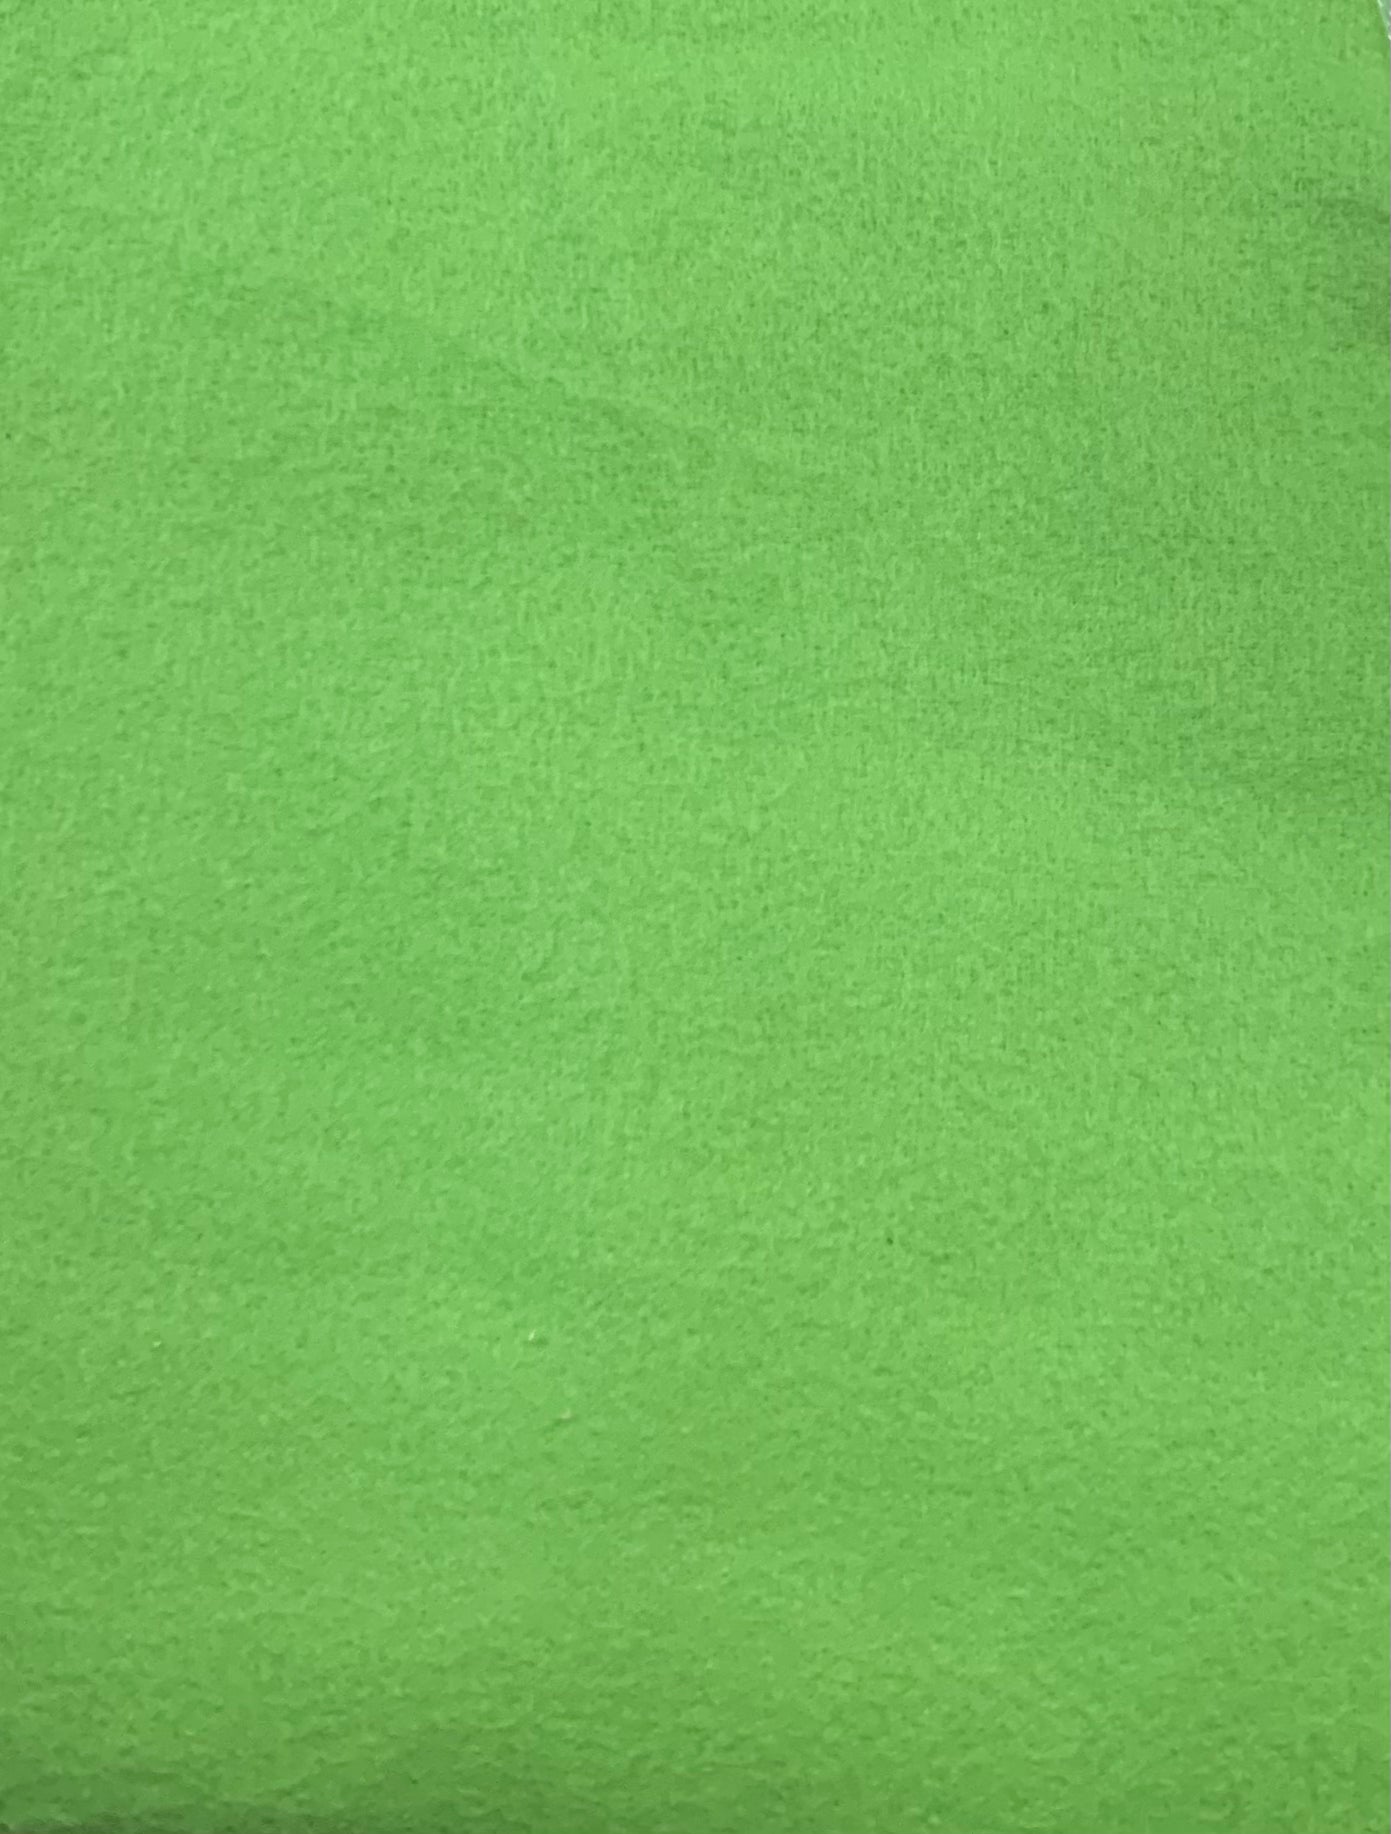 Premium Flannel - Lime # 1192 - Robert Kaufman - Lime Green solid